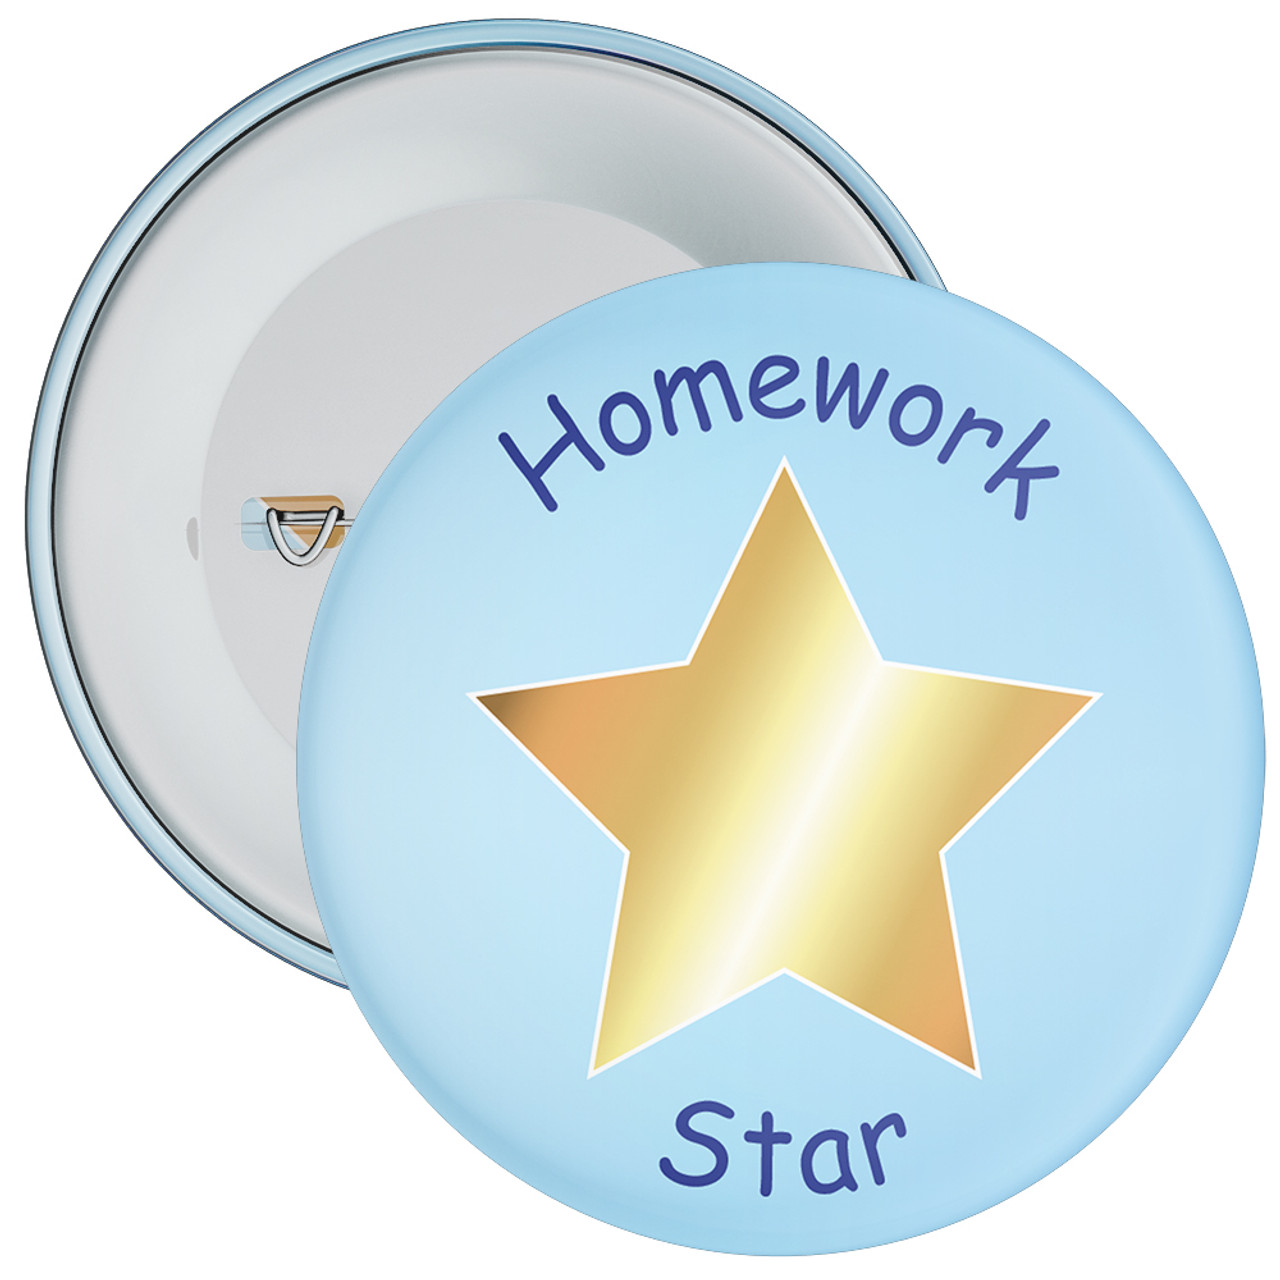 homework star